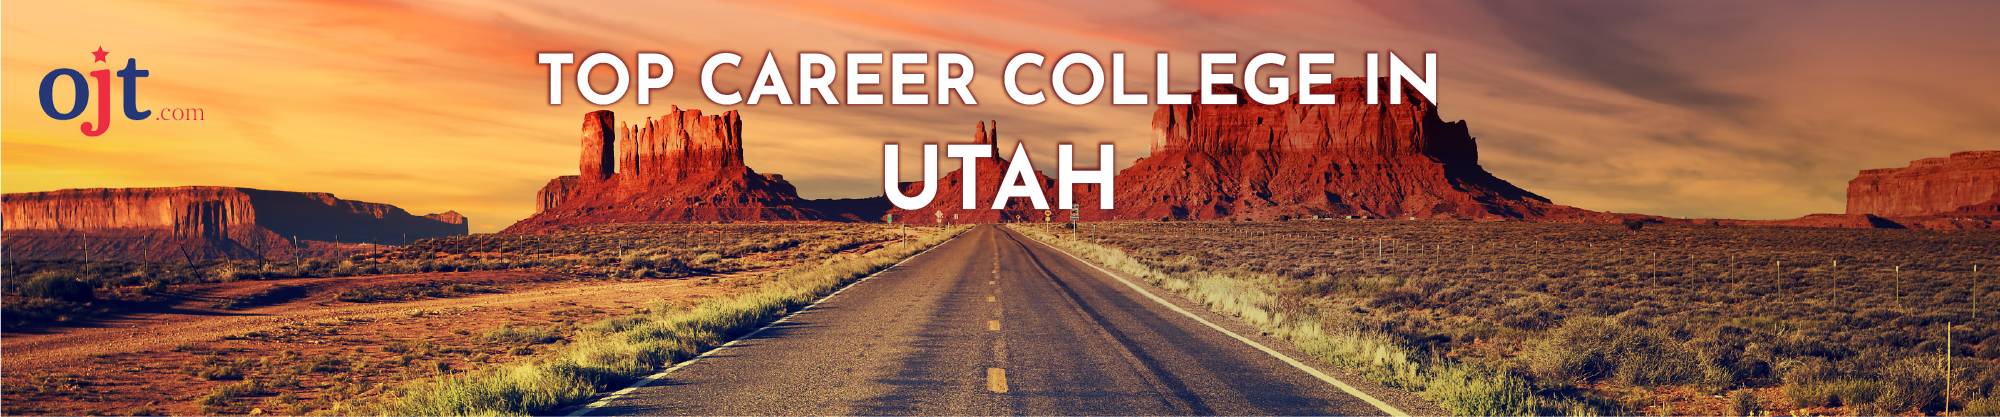 OJT Top Career Colleges in Utah